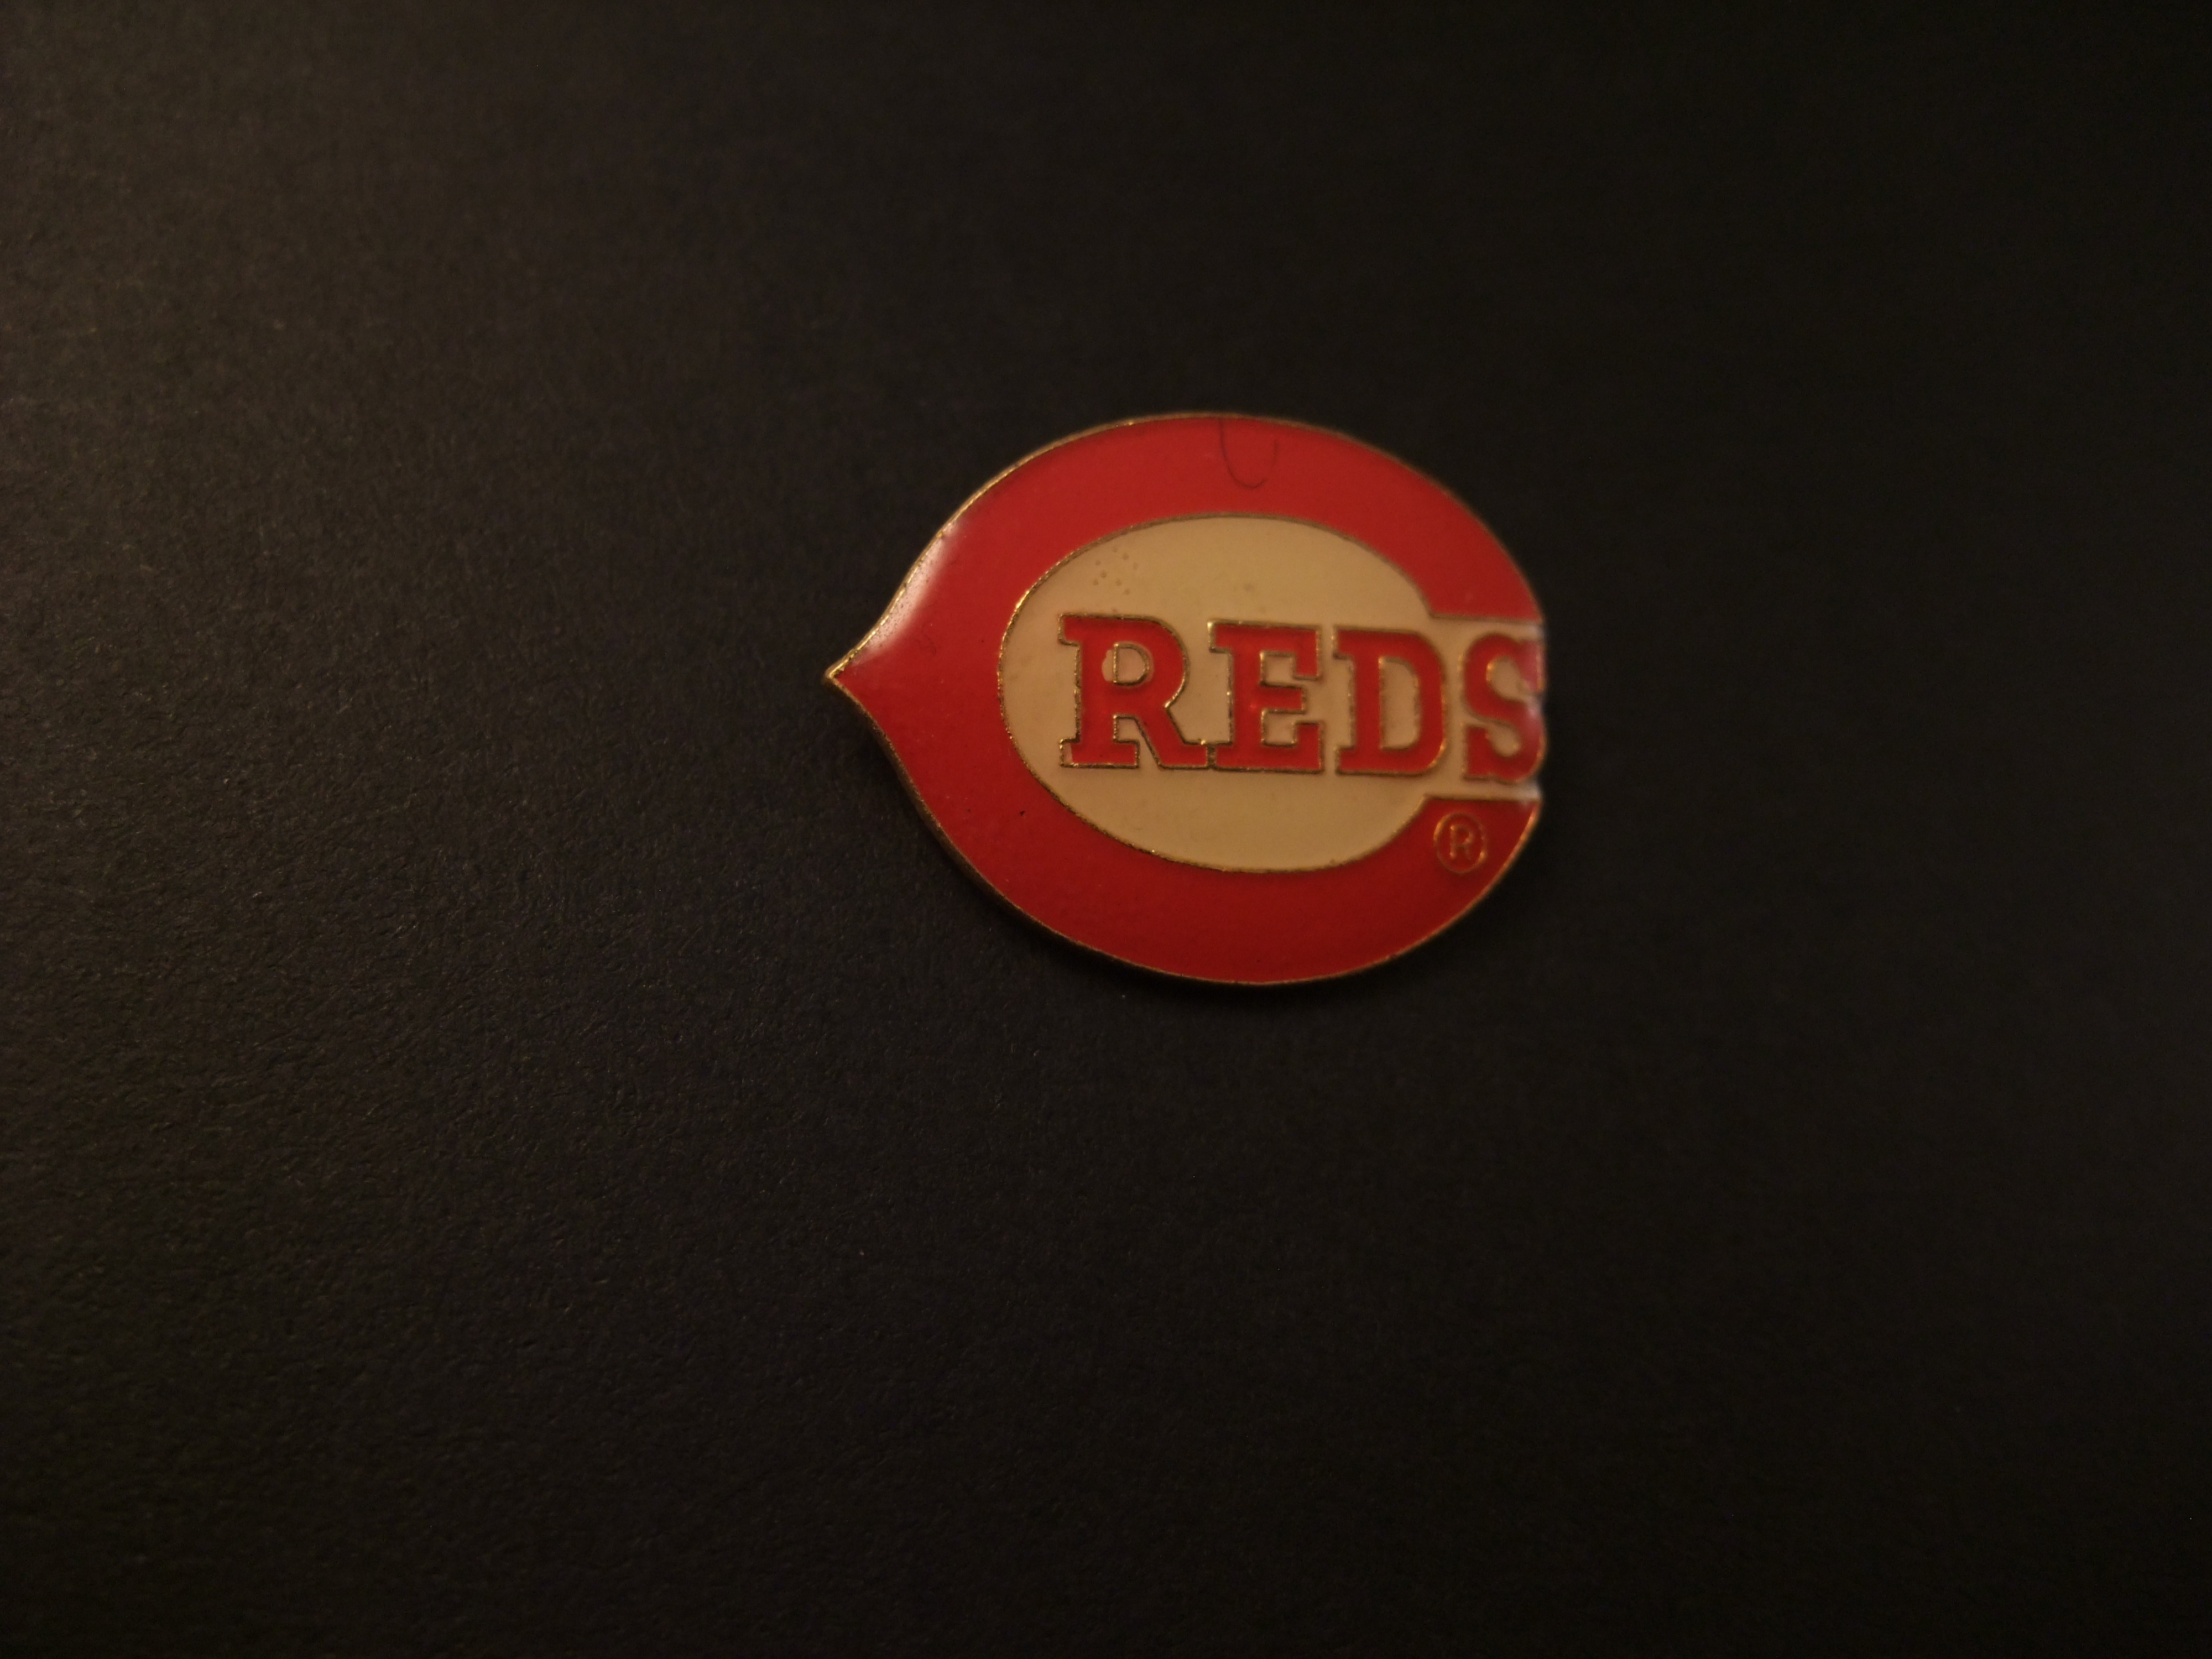 Cincinnati Reds Major League Baseball logo